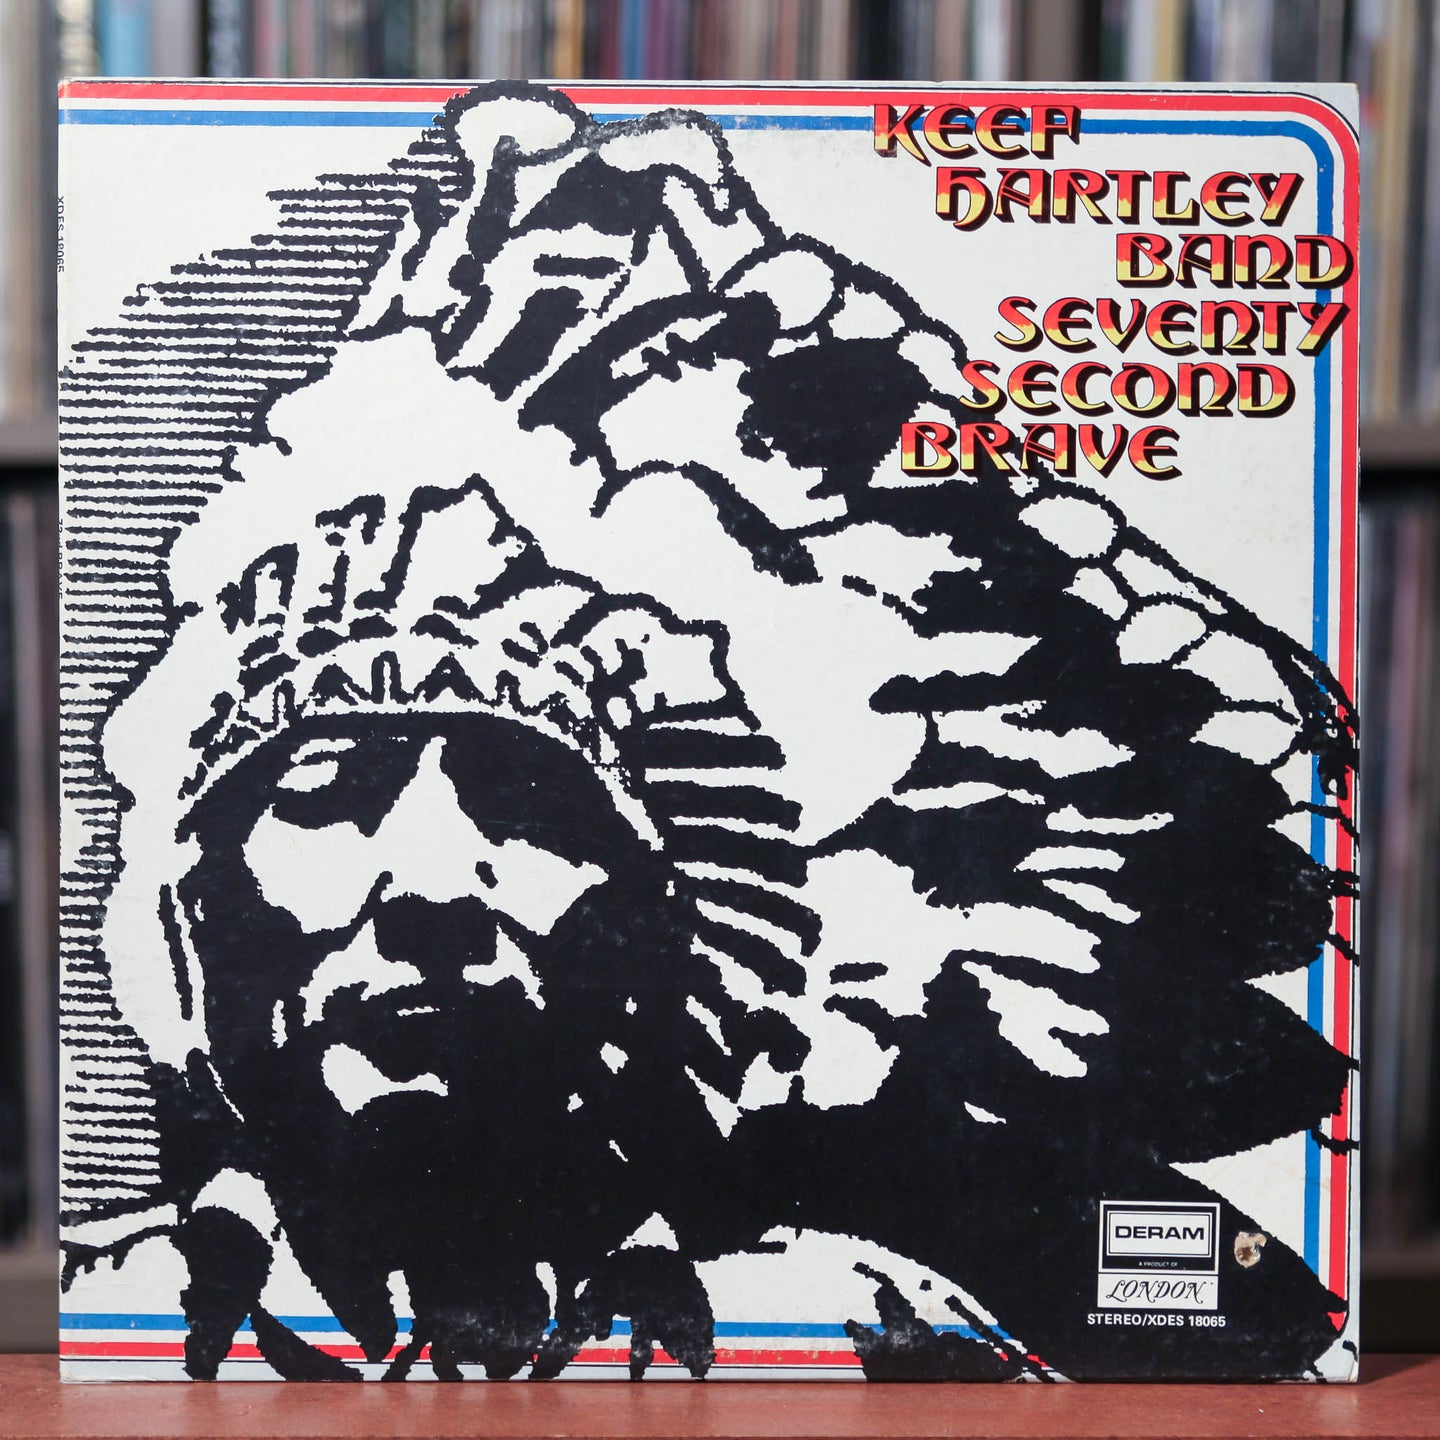 Keef Hartley Band - Seventy Second Brave - 1972 Deram, VG+/VG+